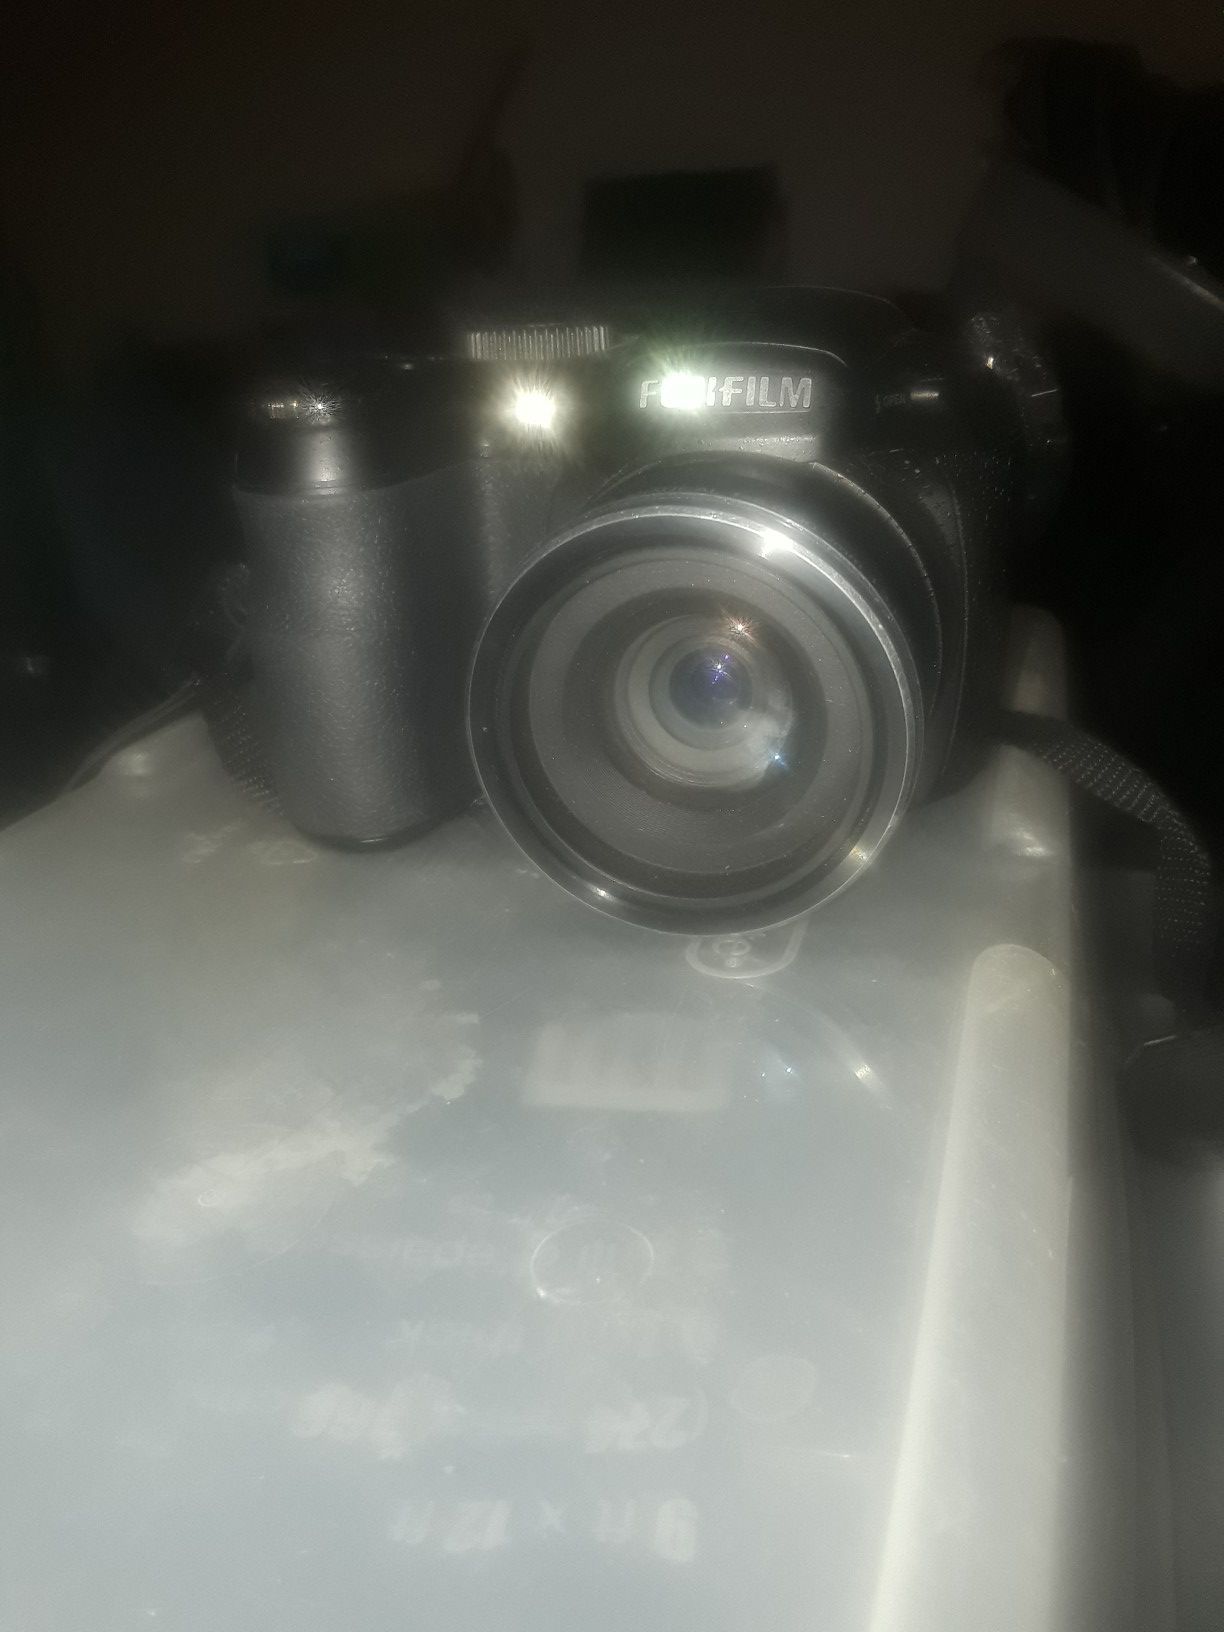 Fujifilm S1800 digital camera